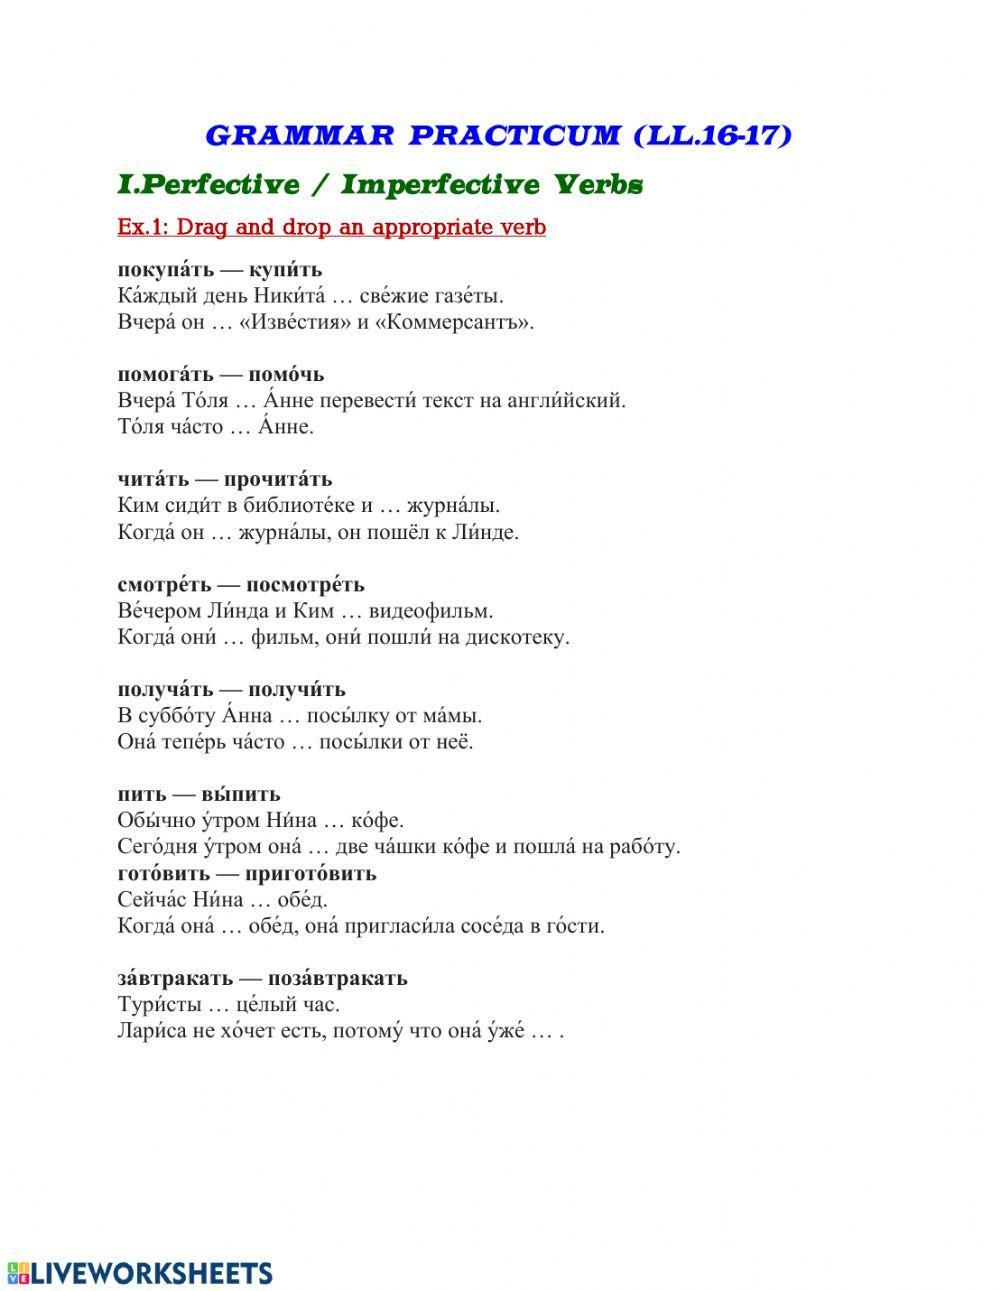 Grammar Practicum (LL.16-17)